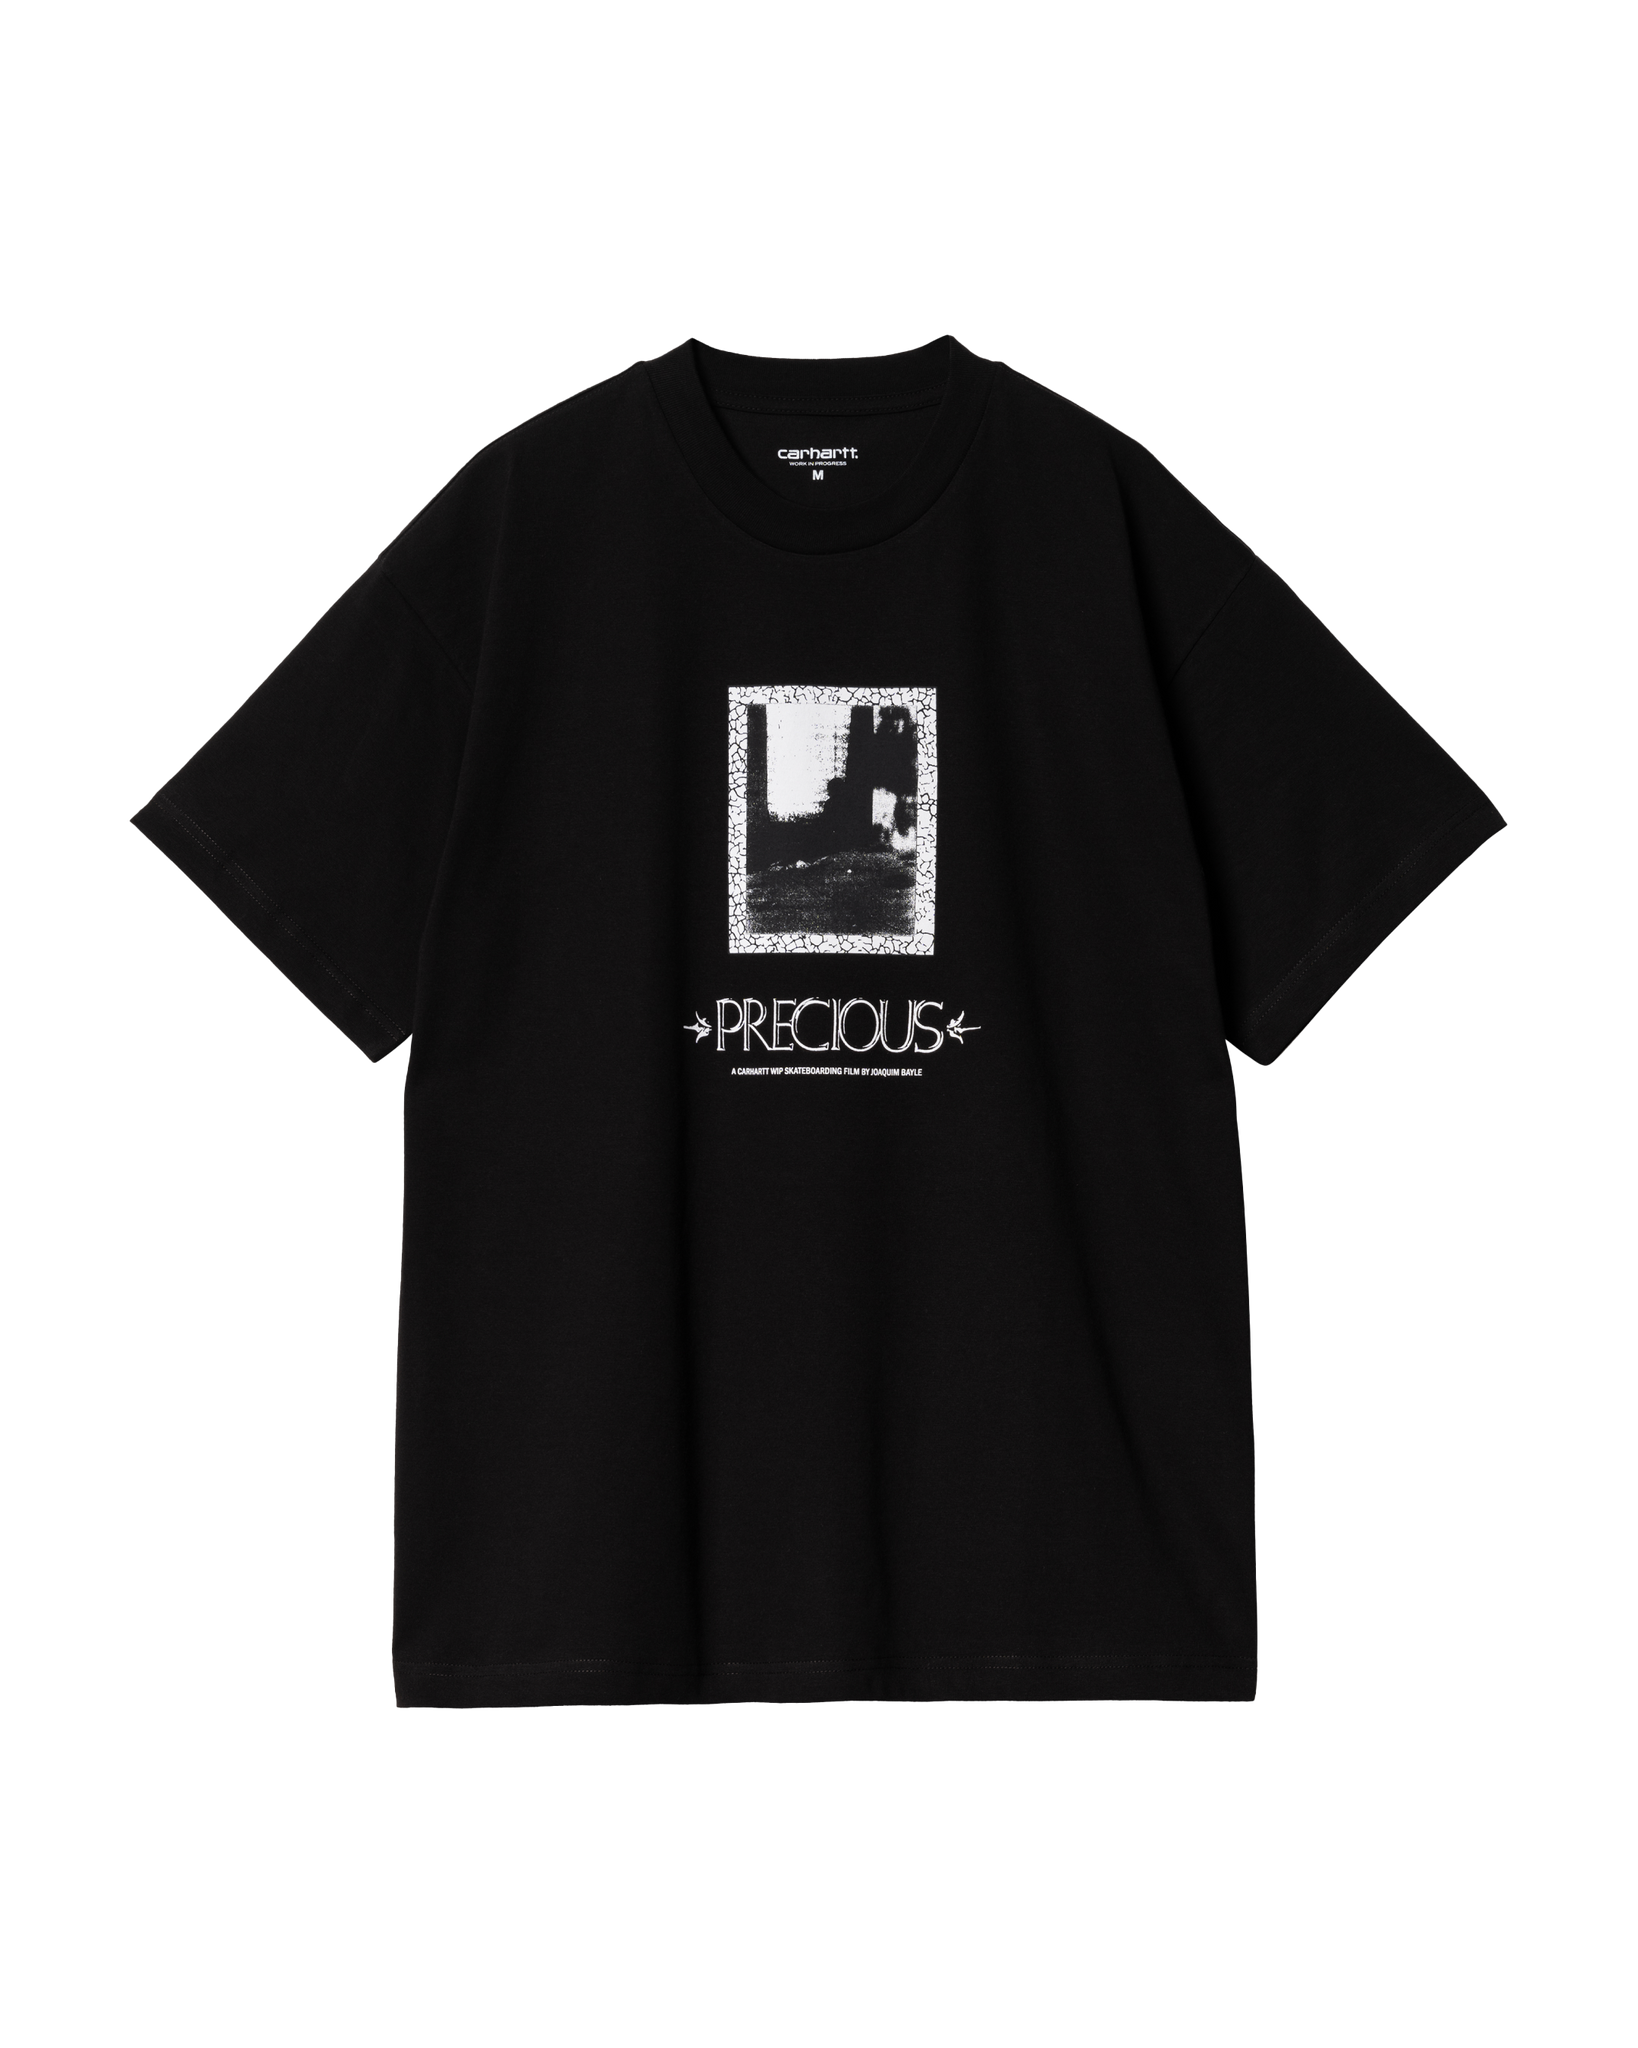 Carhartt Wip - "Precious" T-Shirt